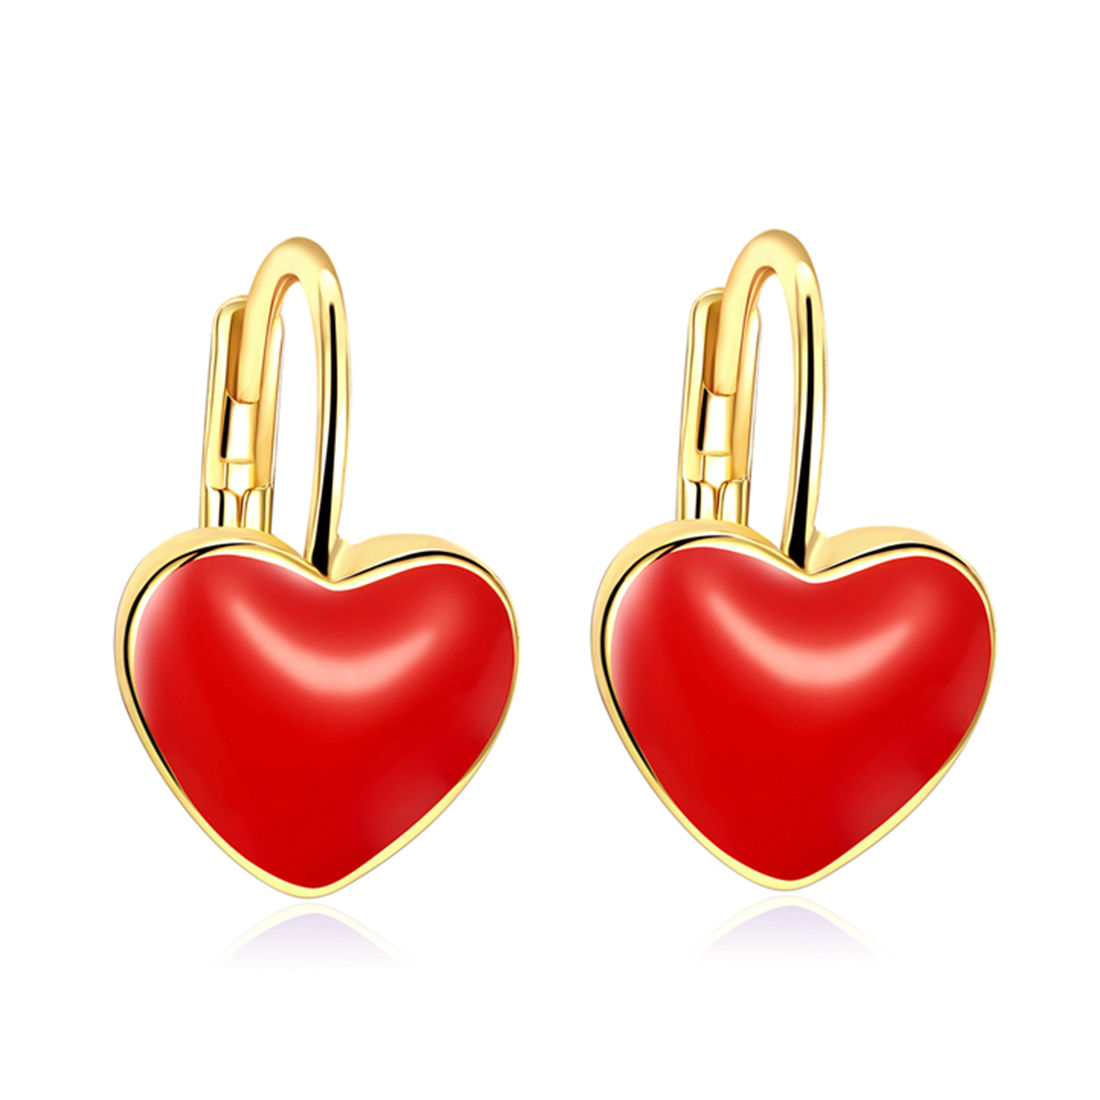 Gold tone kerala style red heart shape pendant with earrings dj43461   dreamjwell